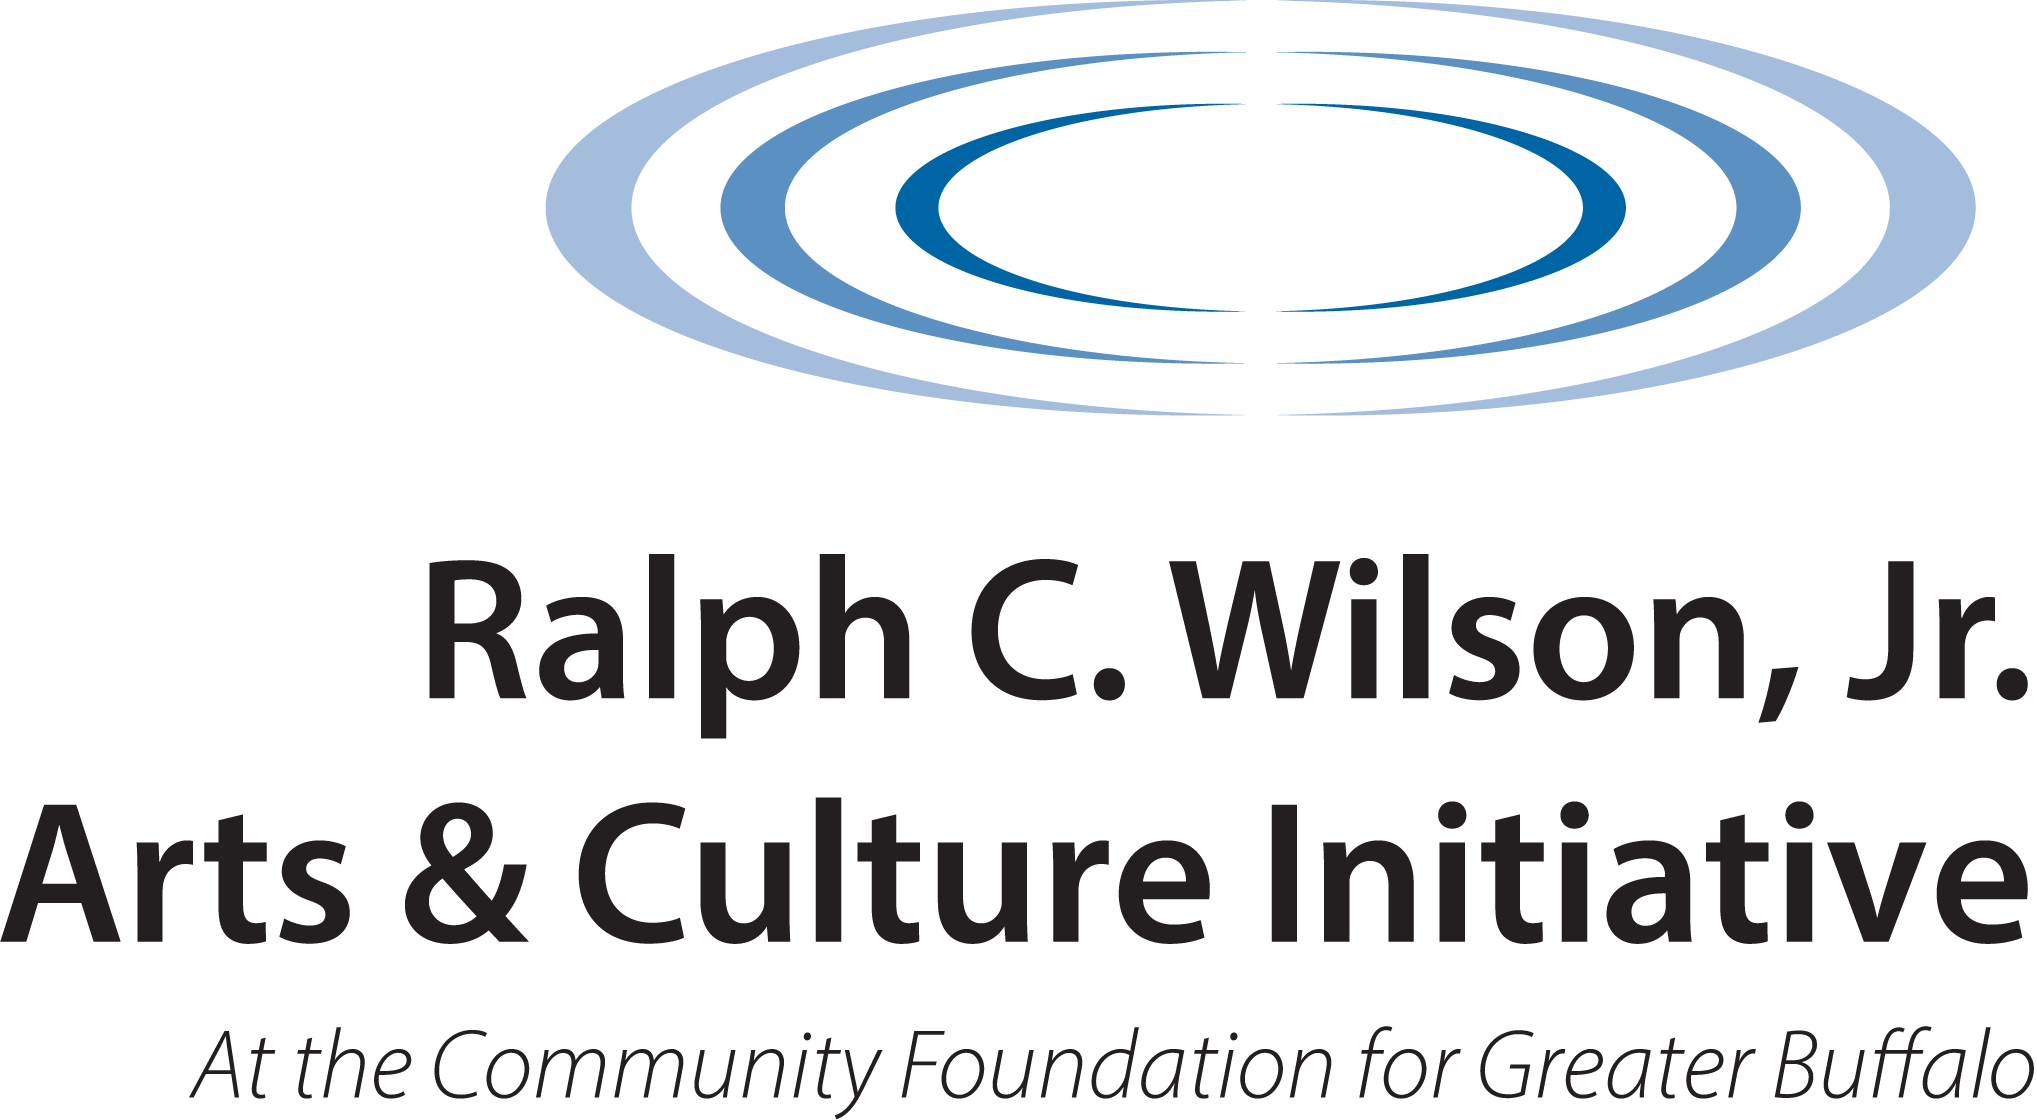 Ralph C. Wilson Jr. Arts & Culture Initiative logo